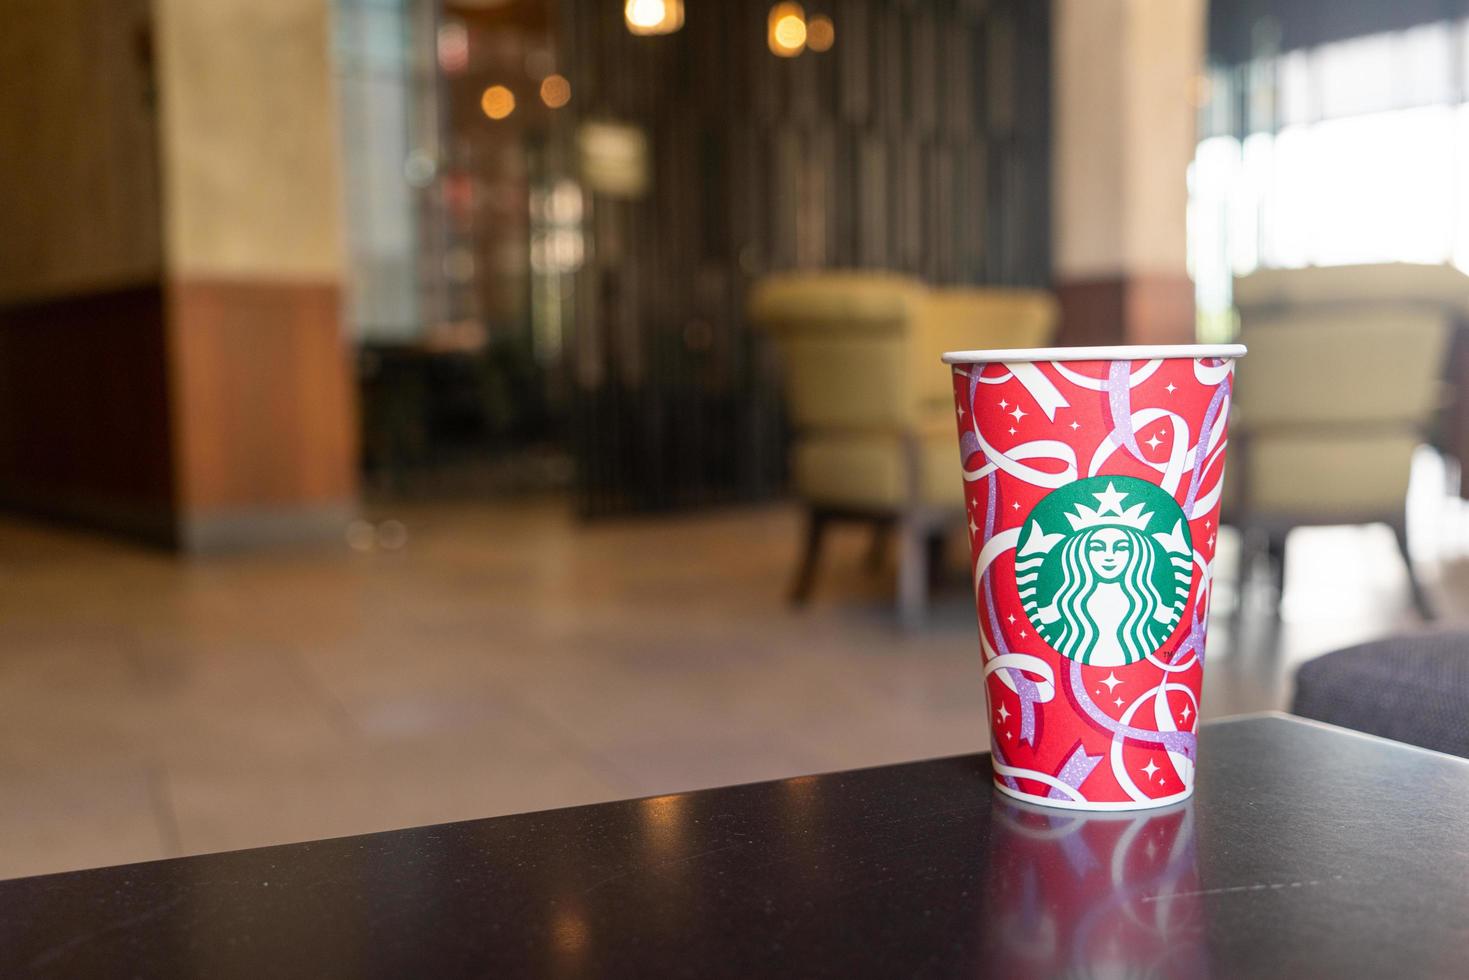 bangkok, thailandia - 24 nov 2021 - caffè Starbucks bevanda calda con tema natalizio sul tavolo. foto